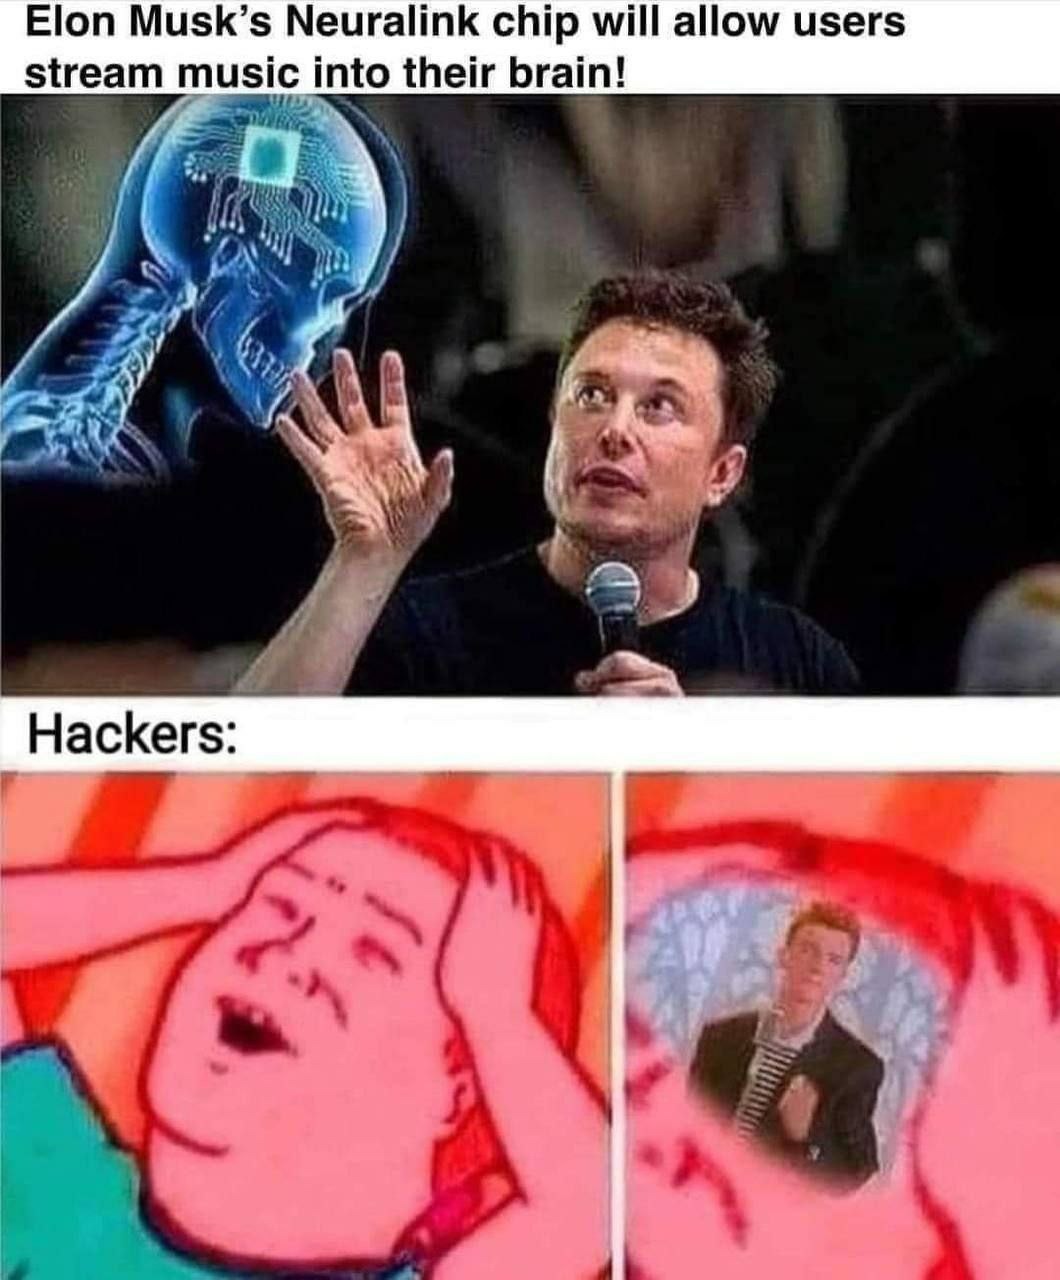 Elon Musket - meme